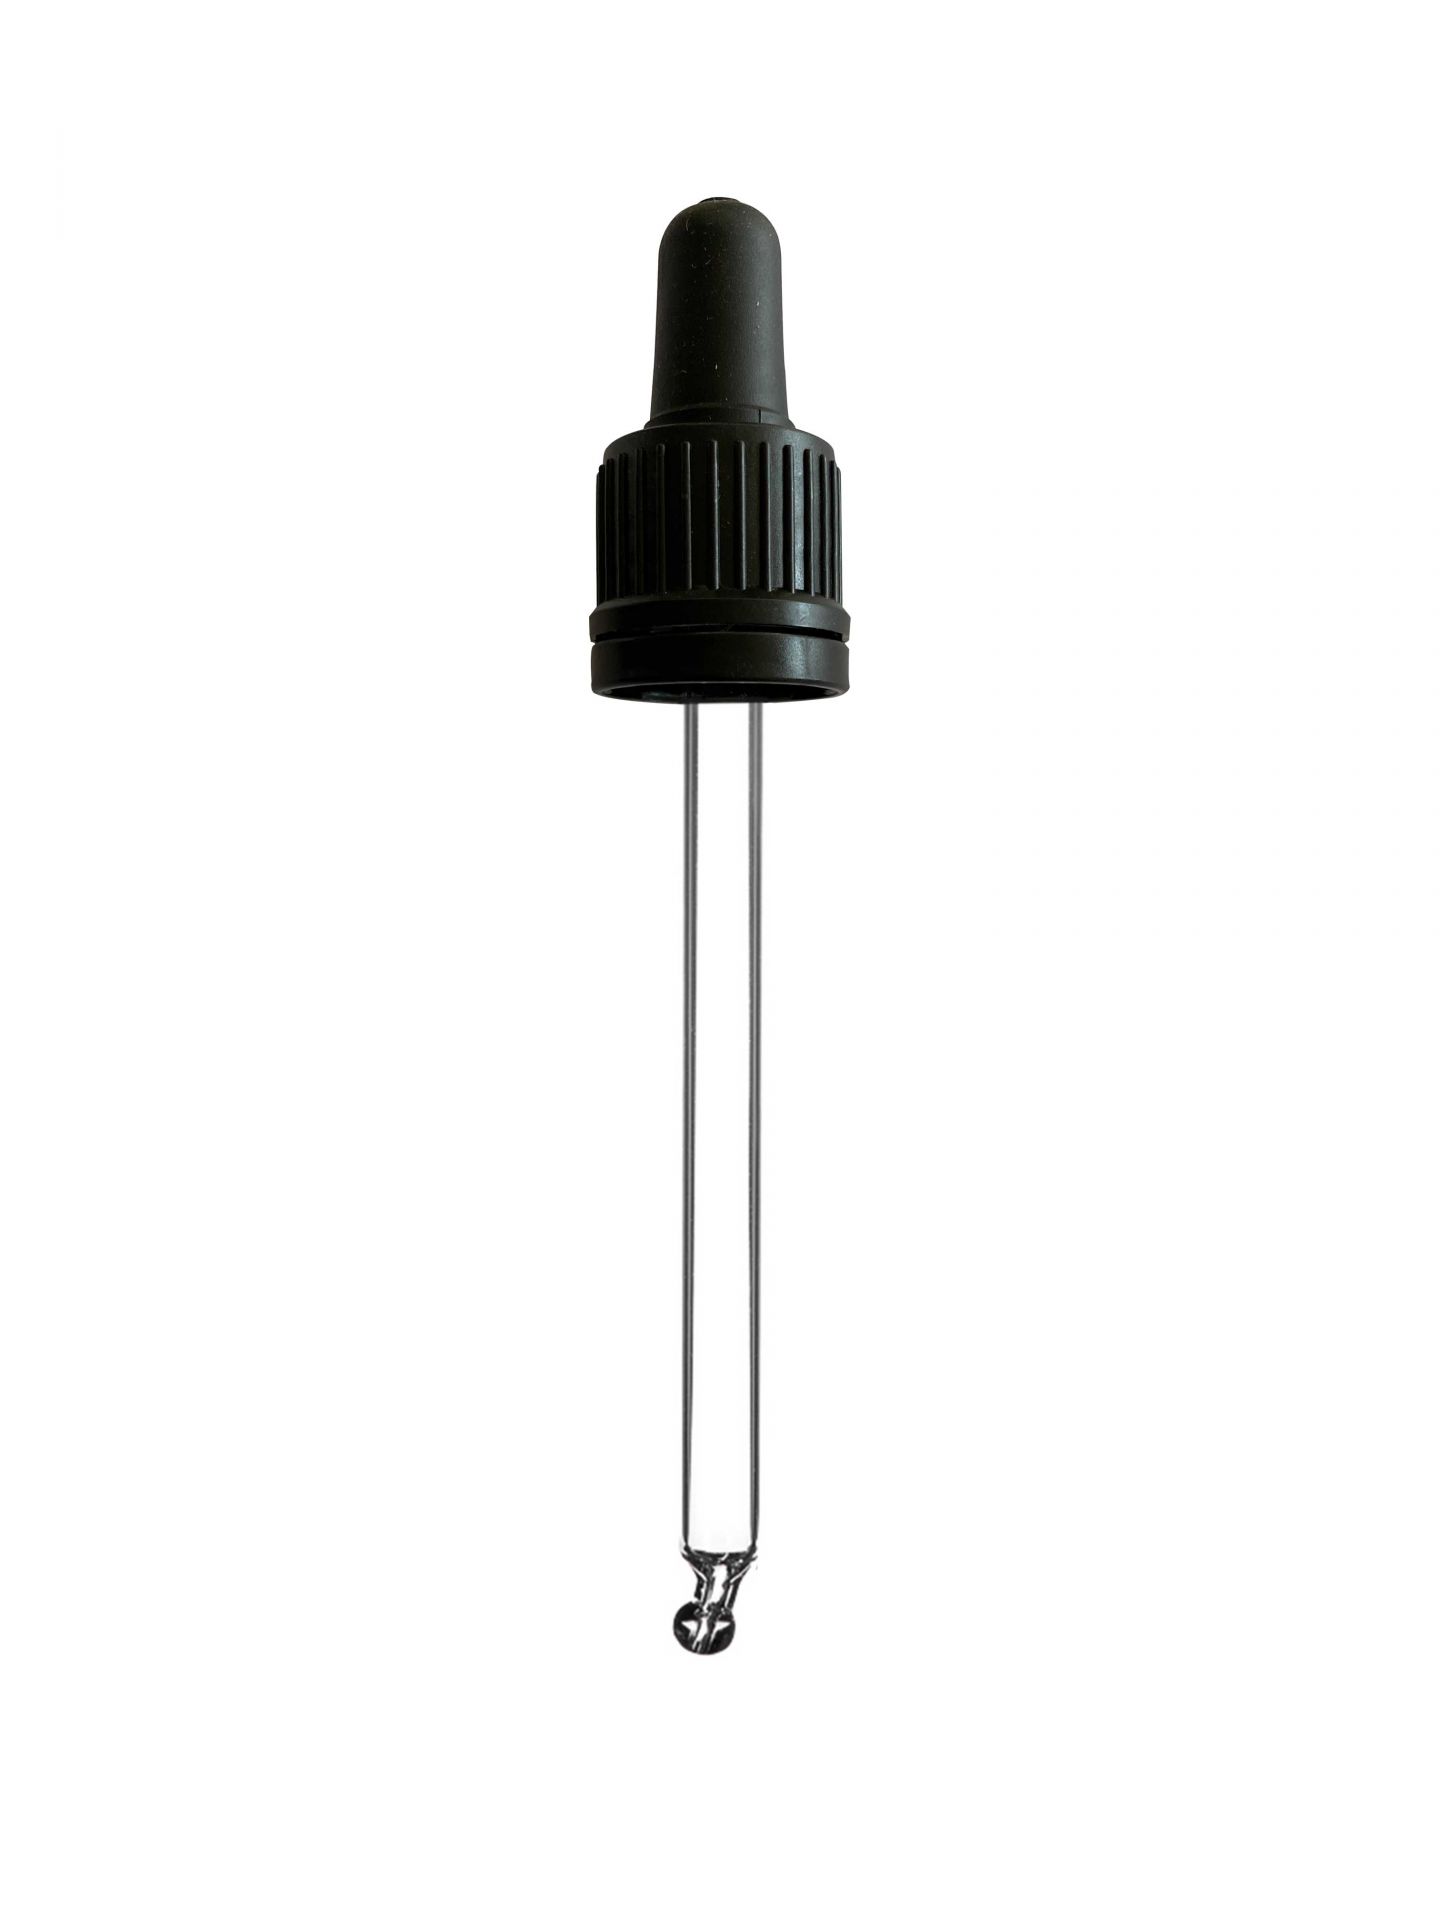 Pipette tamper evident DIN18, II, black, ribbed, bulb TPE, dose 0.7ml, bent ball tip (Orion 60)